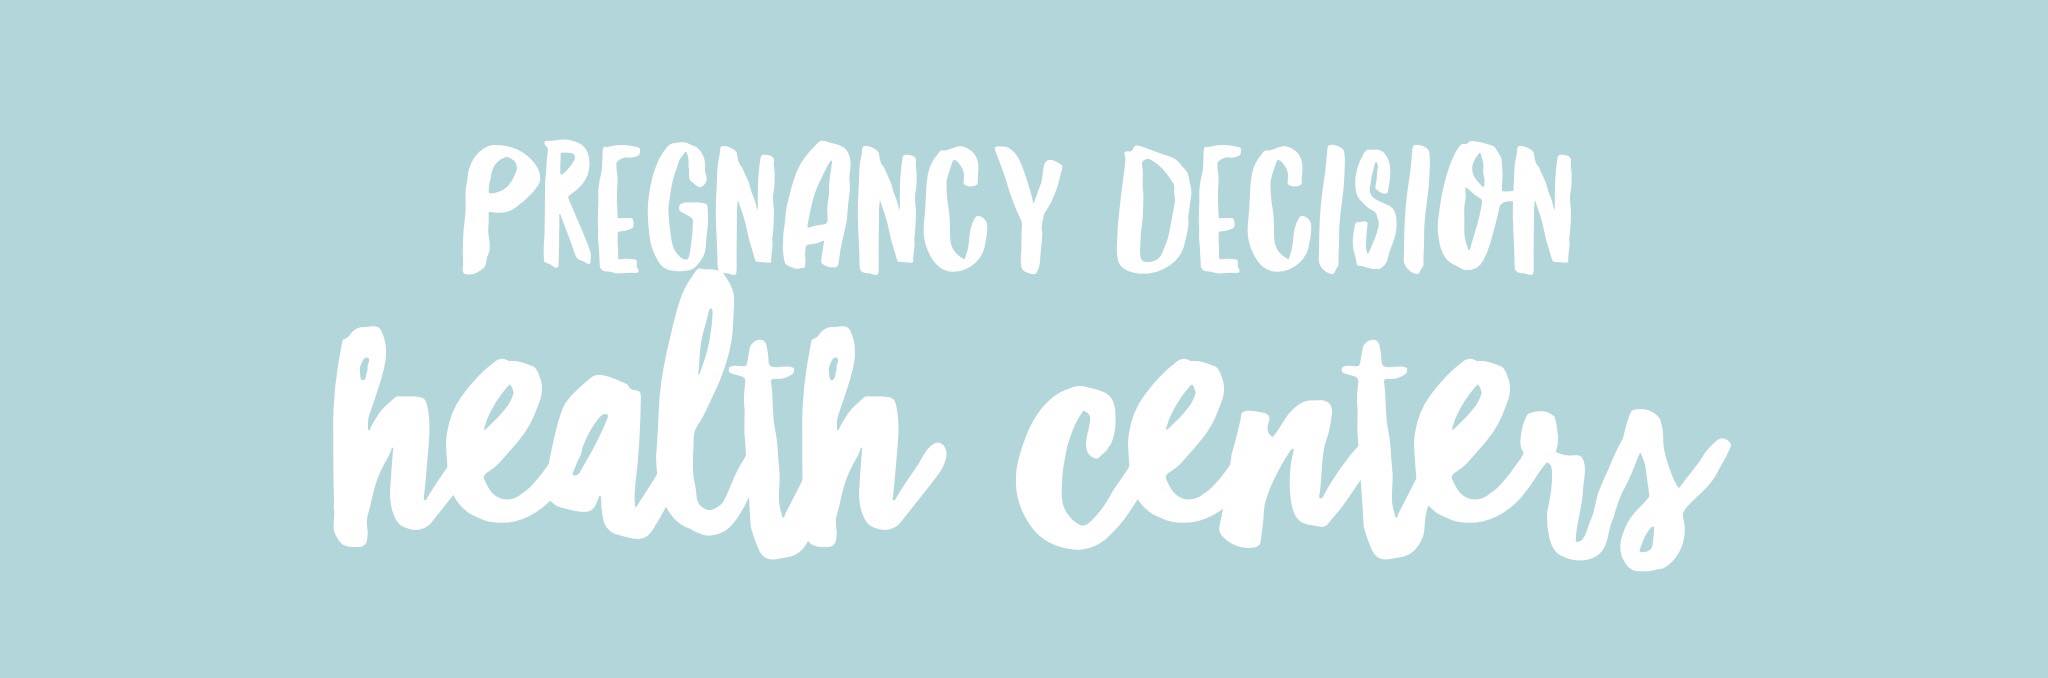 Pregnancy Decision Health Centers